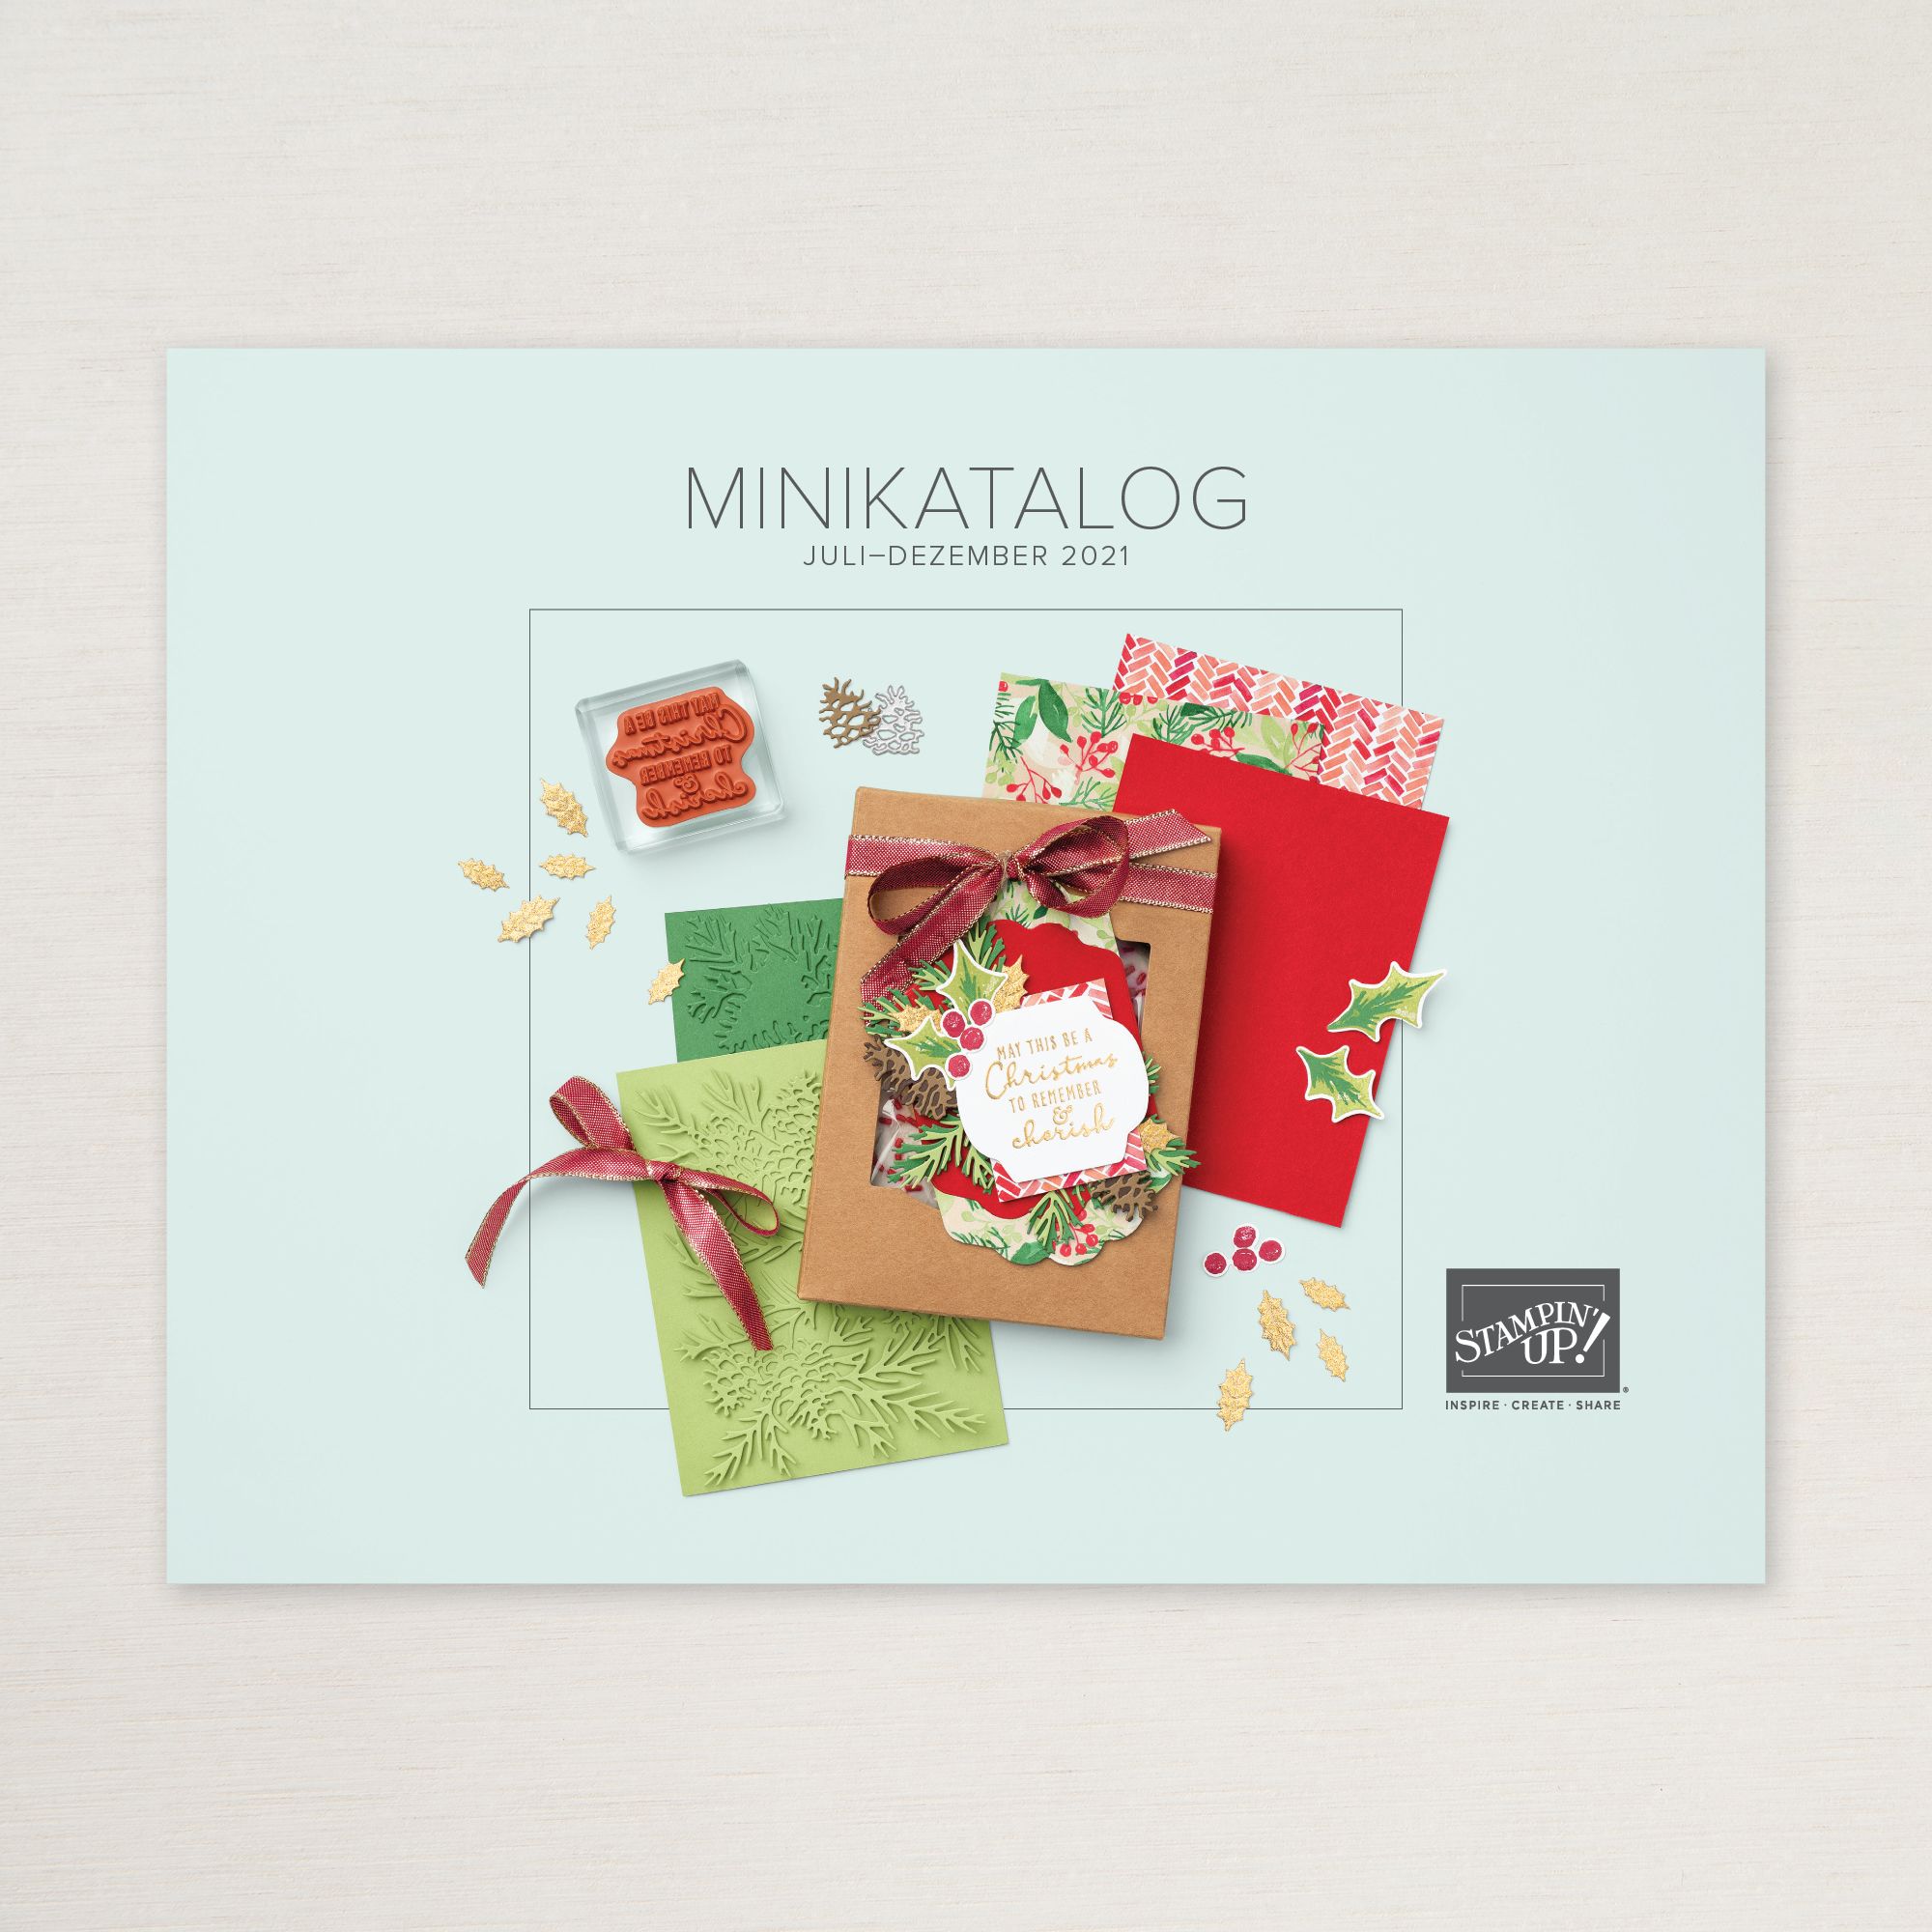 Stampin Up Minikatalog August-Dezember 2021 cover